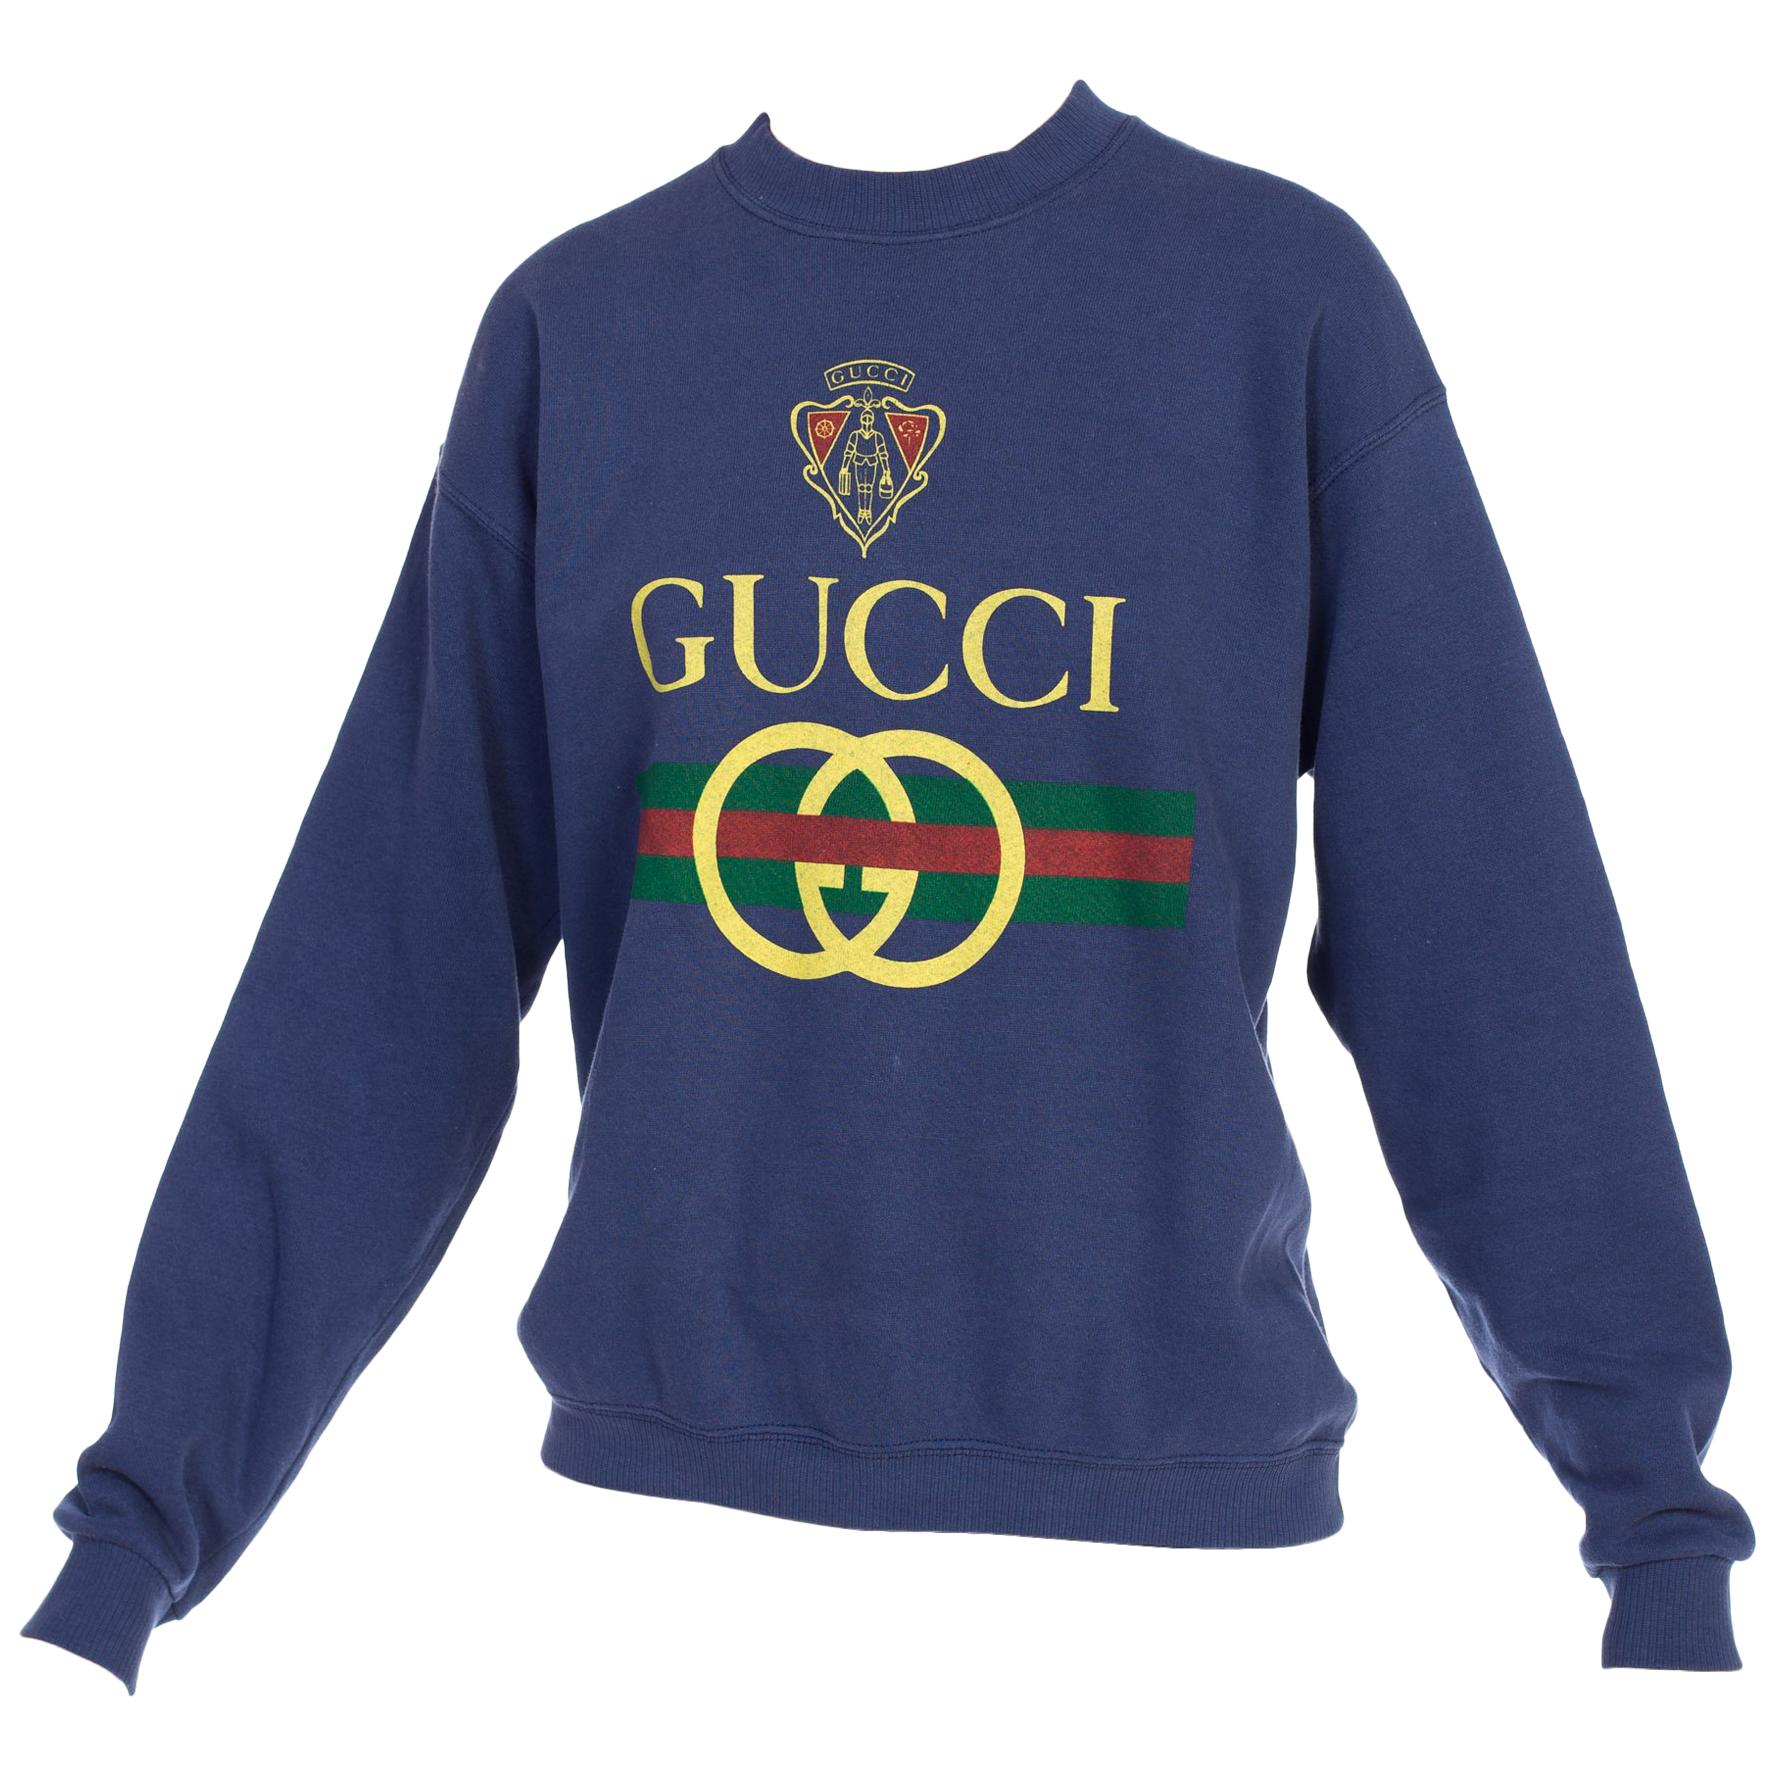 1980s Bootleg Gucci Sweat at bootleg gucci bootleg gucci sweatshirt, betsey johnson bracelet